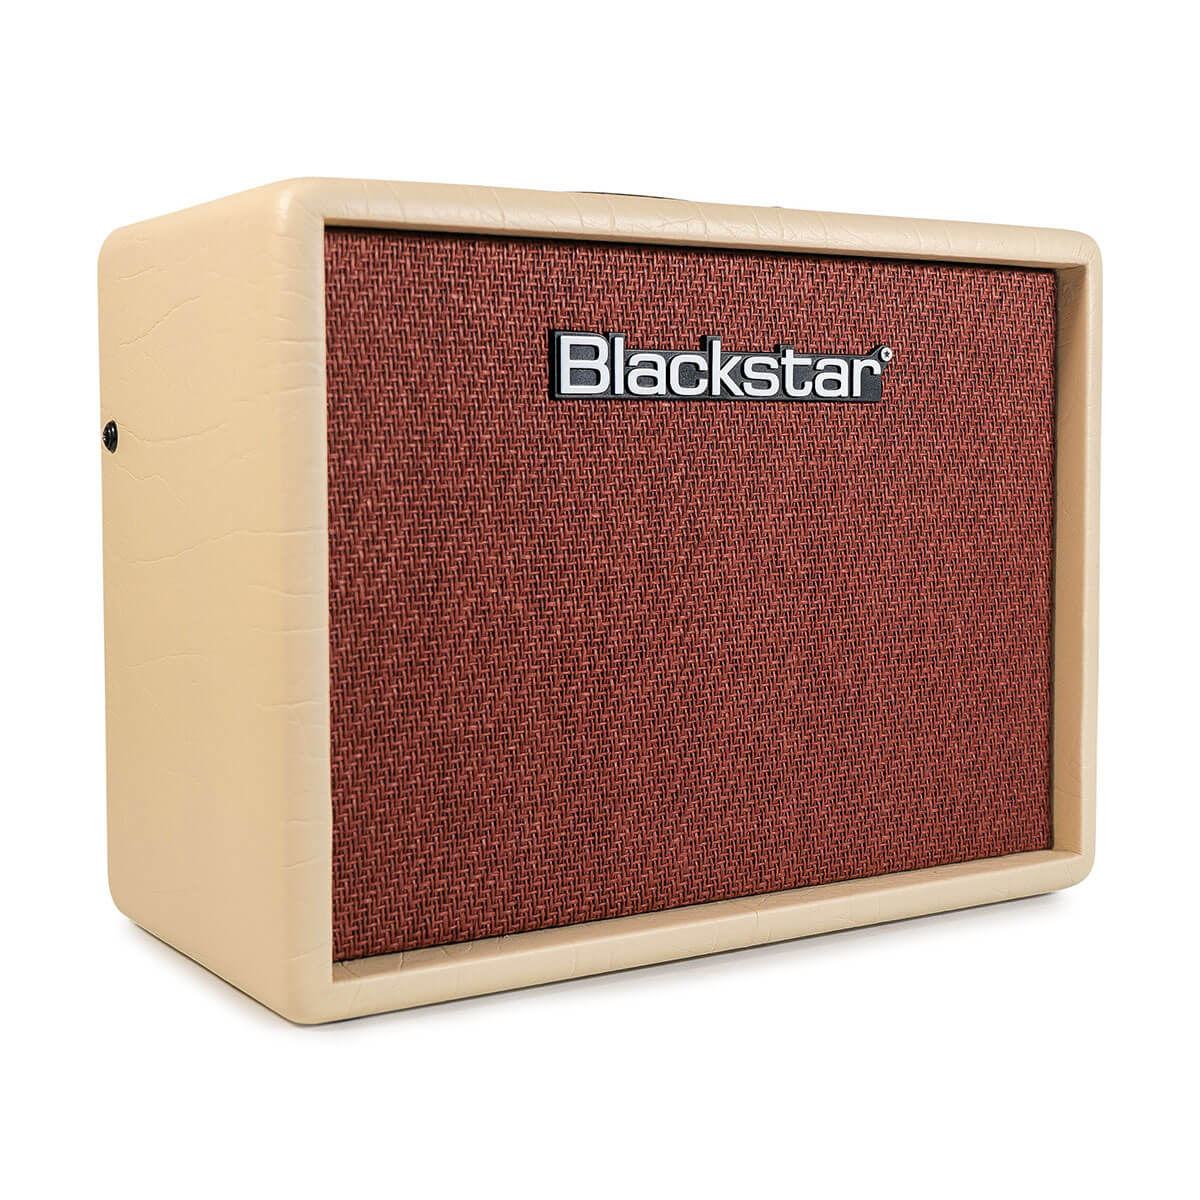 Blackstar Debut 15E guitar amp right